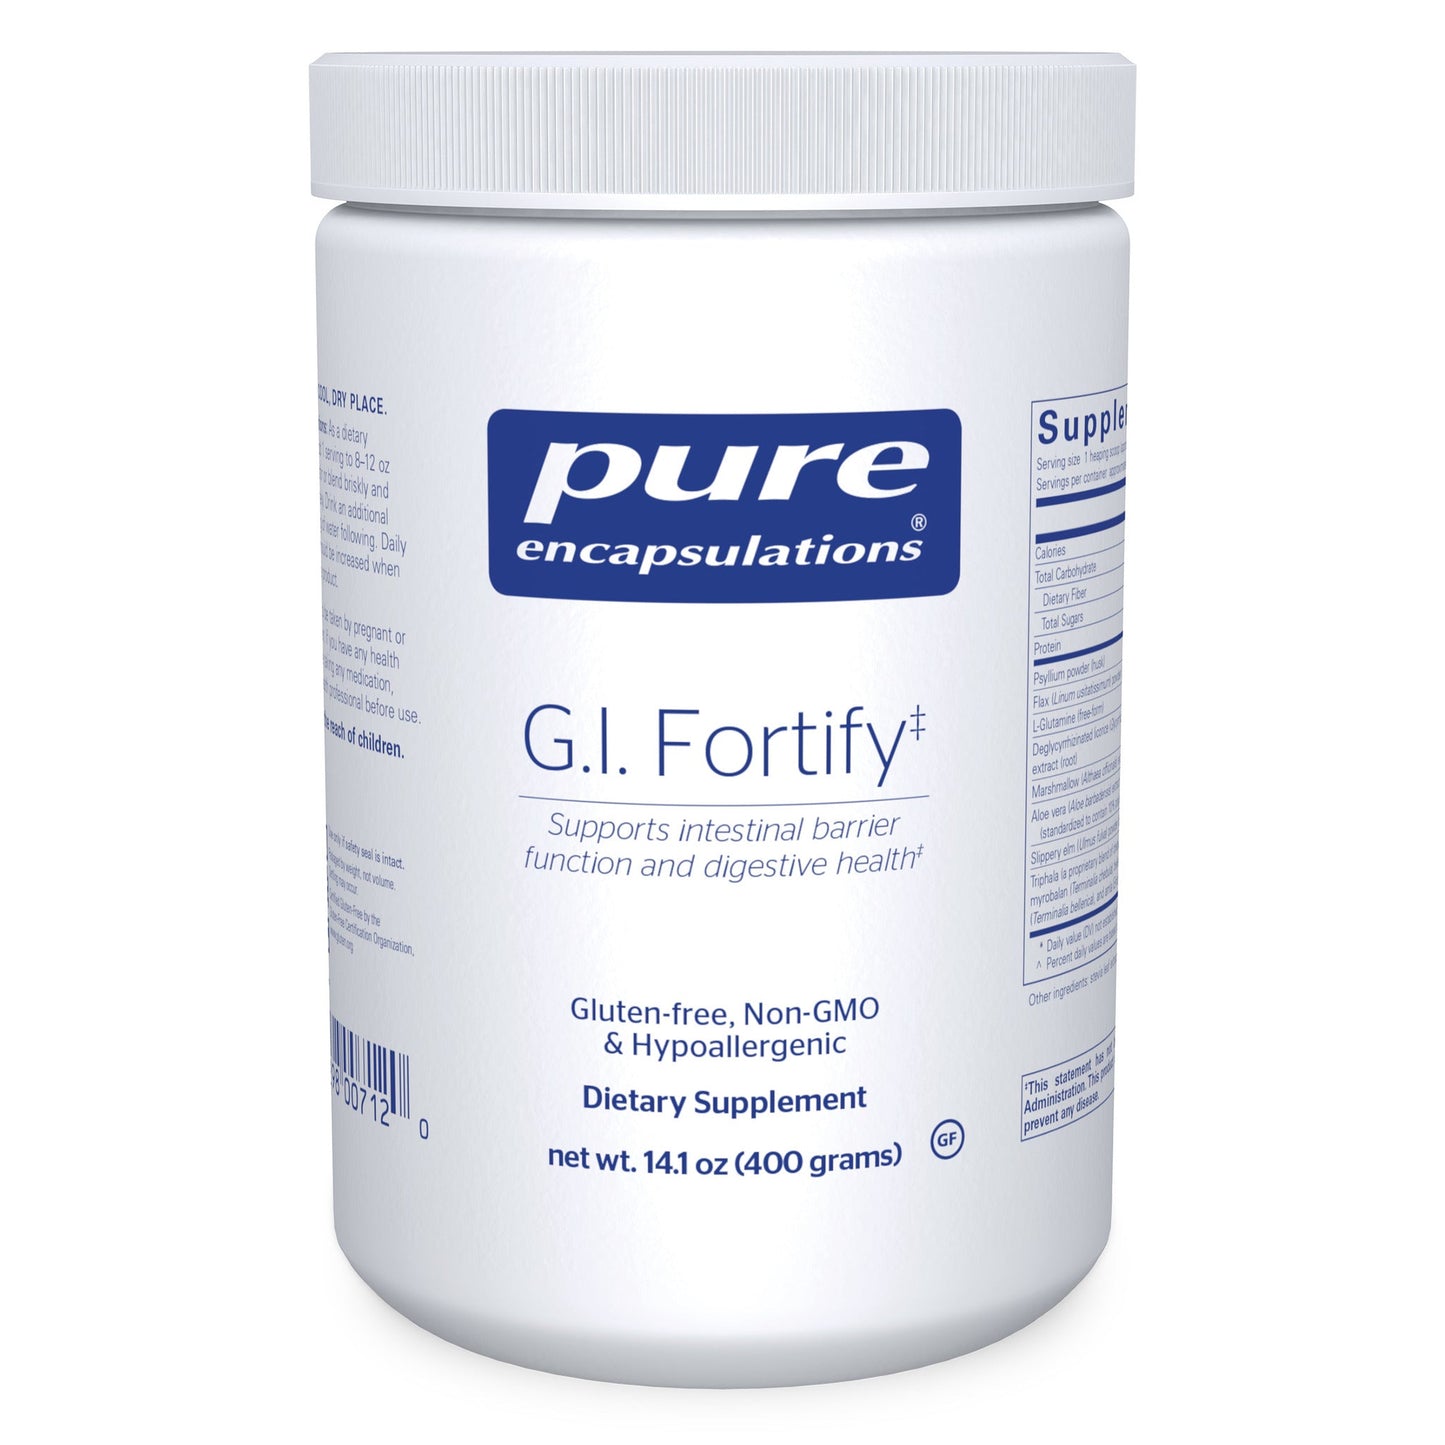 G.I. Fortify (Powder) - Pure Encapsulations